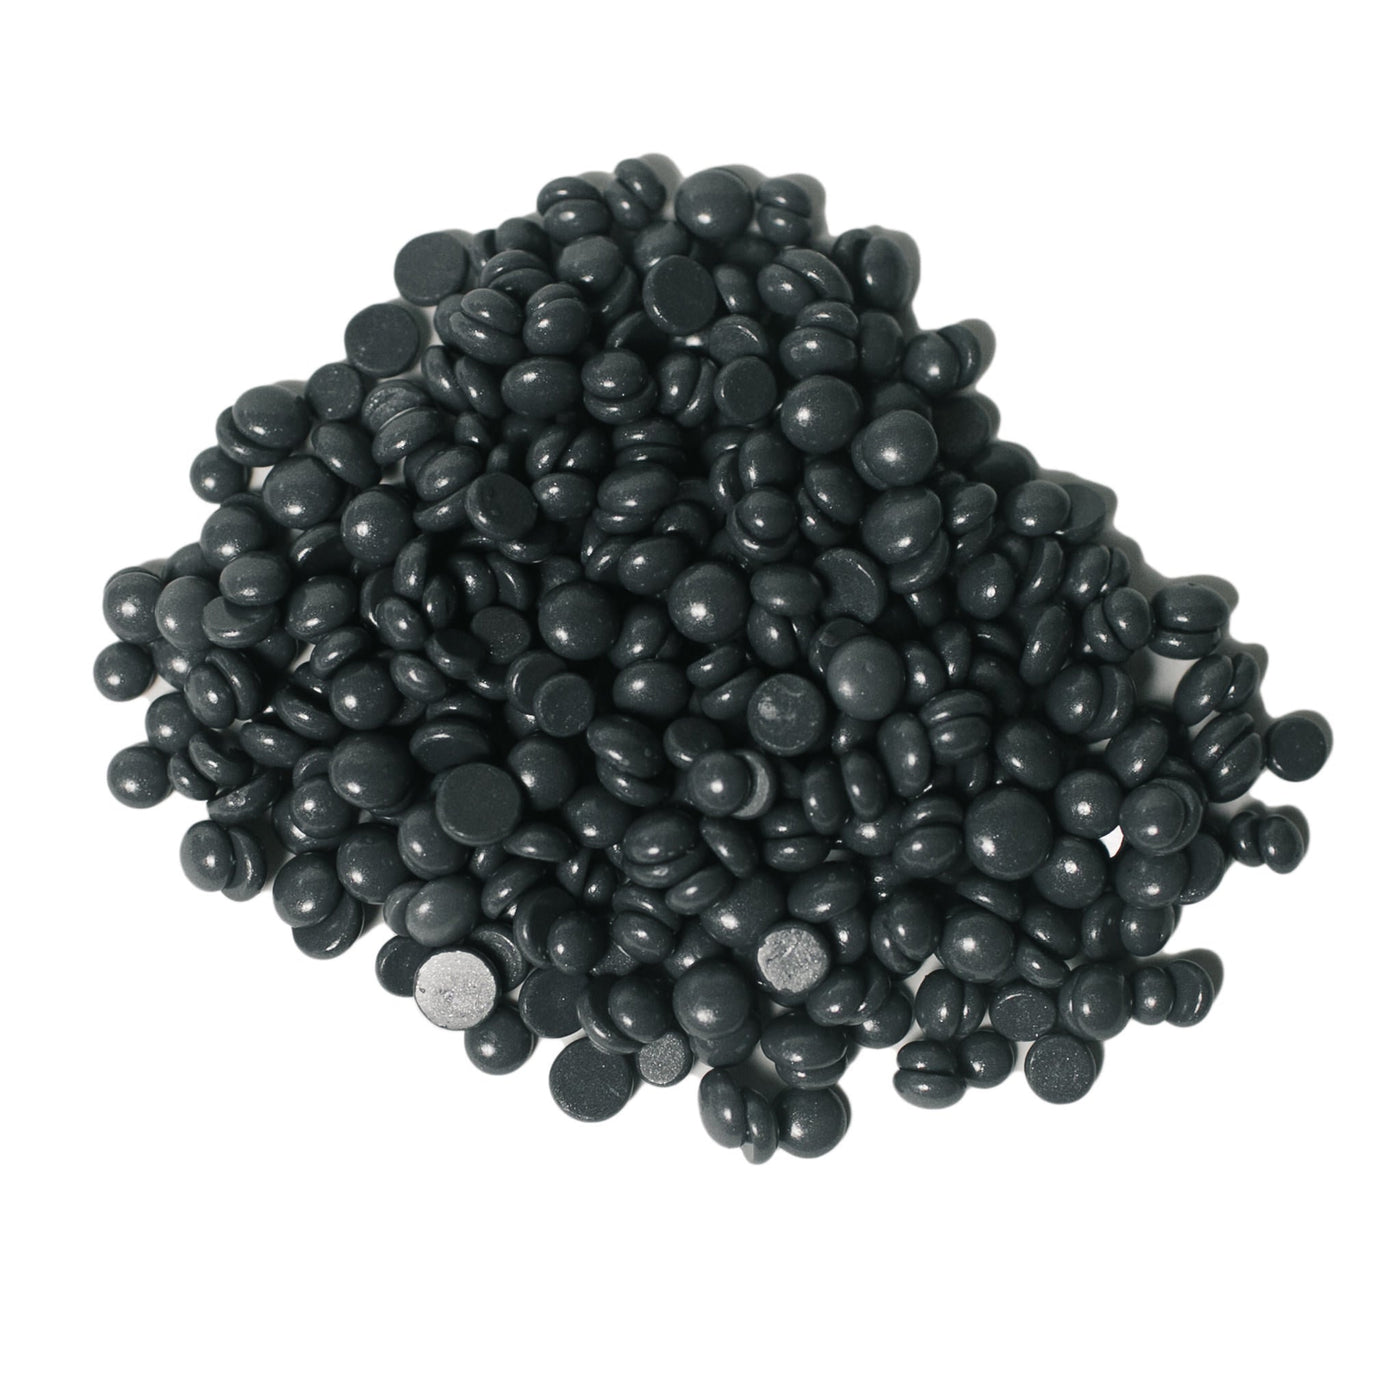 Dermwax Black Onyx Hard Wax Beads